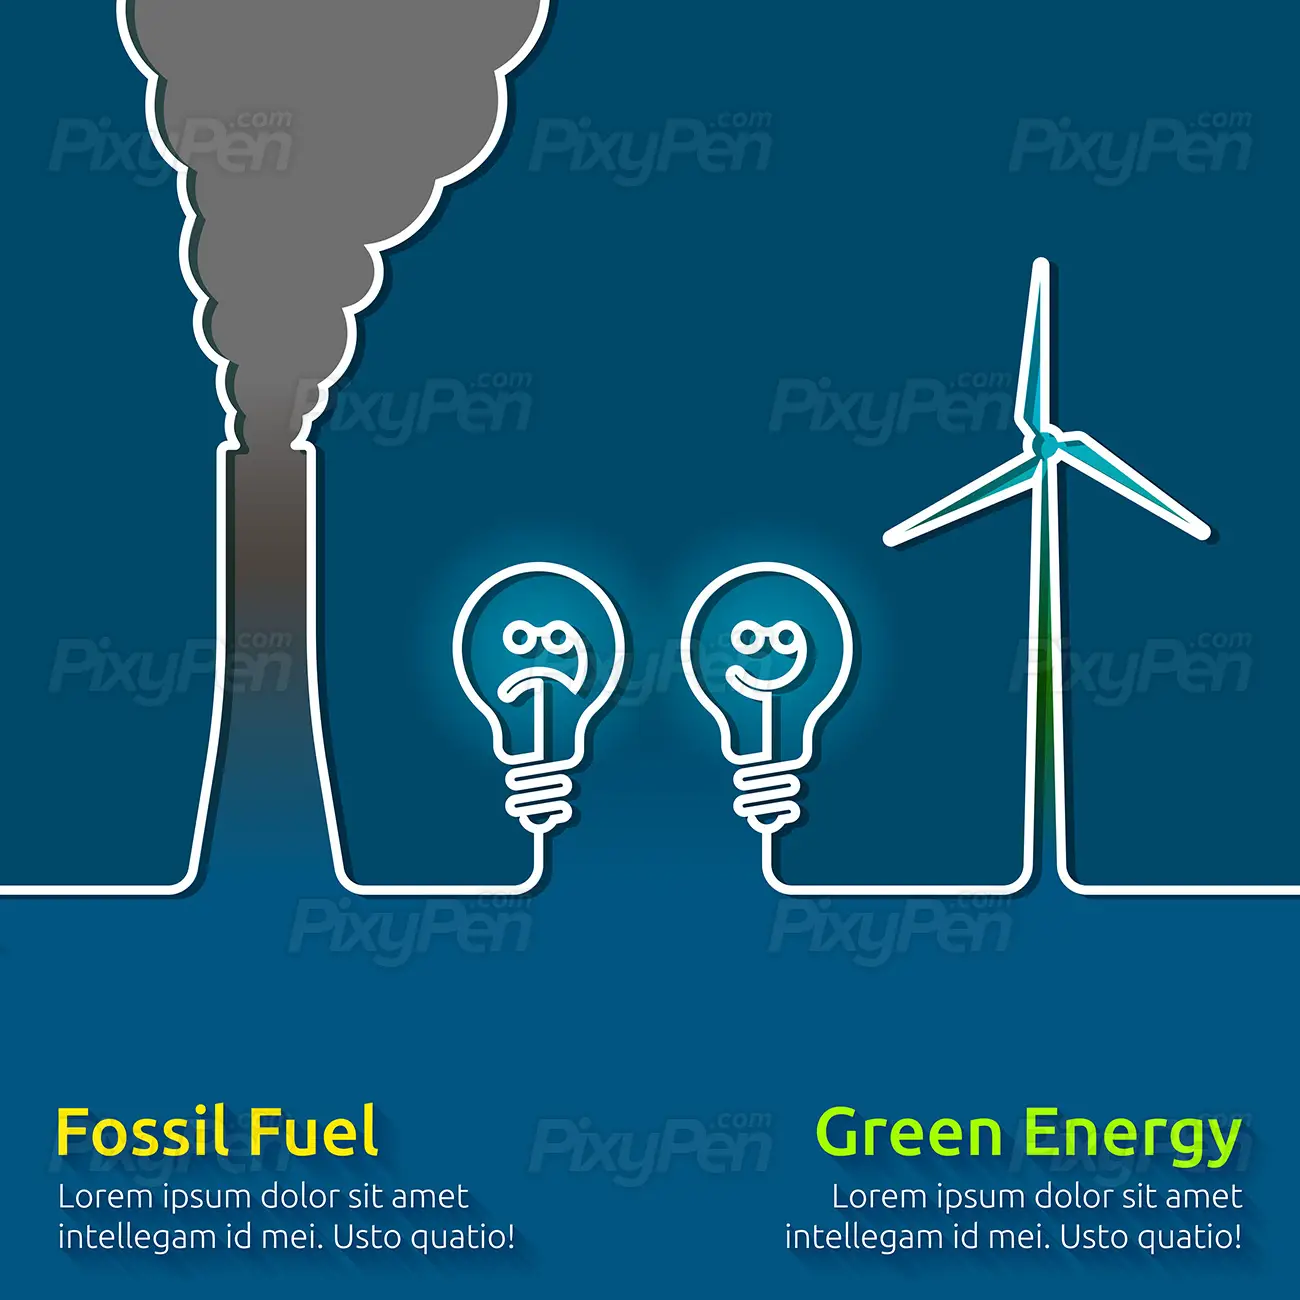 Fossil fuels vs renewable energy